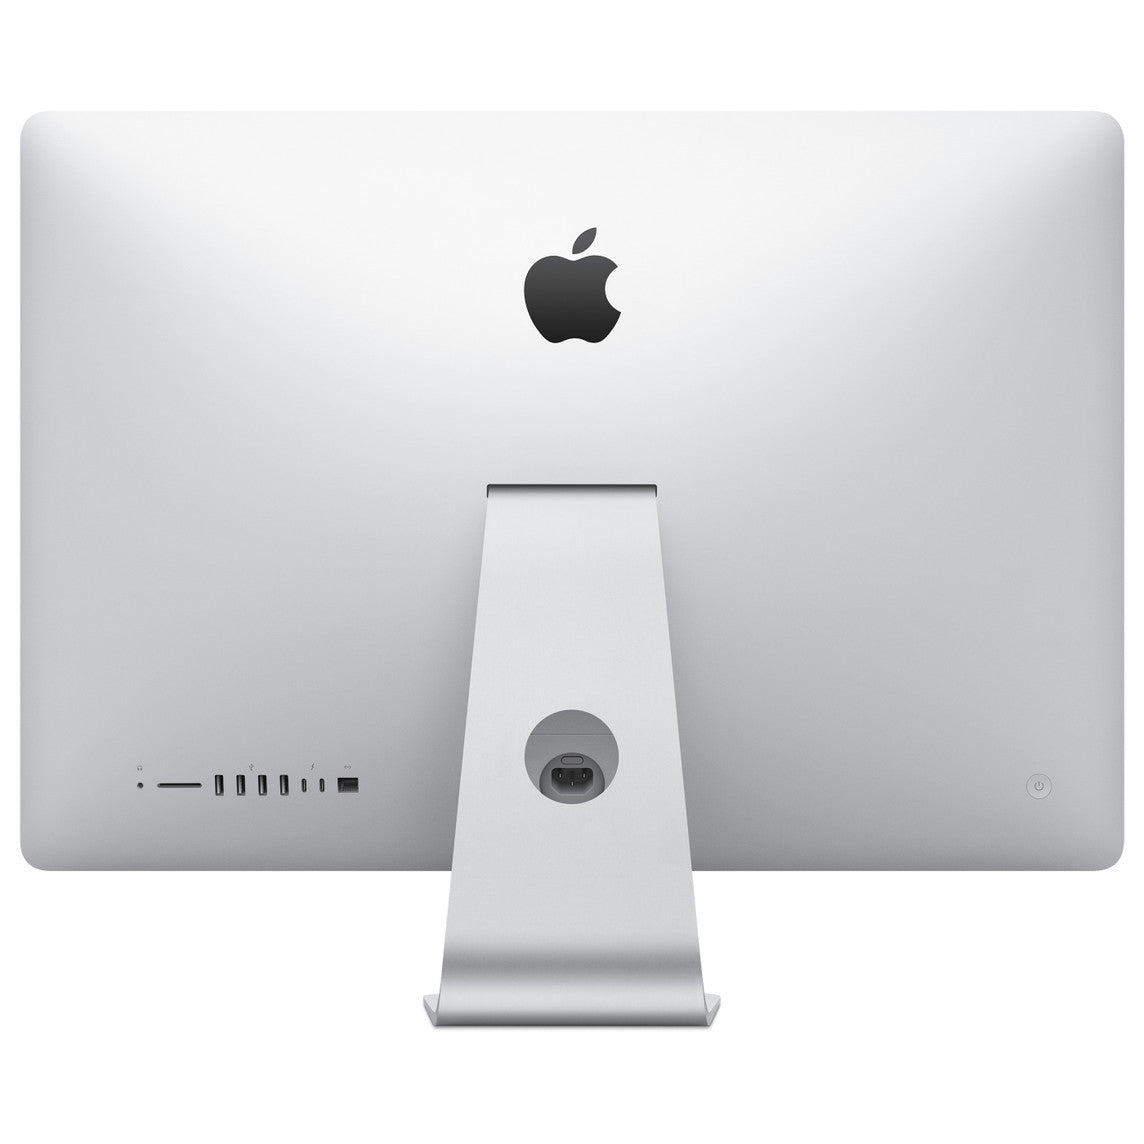 Apple iMac (Retina 4K, 21.5-inch) – Intel Core i7 (2015) – Silver 